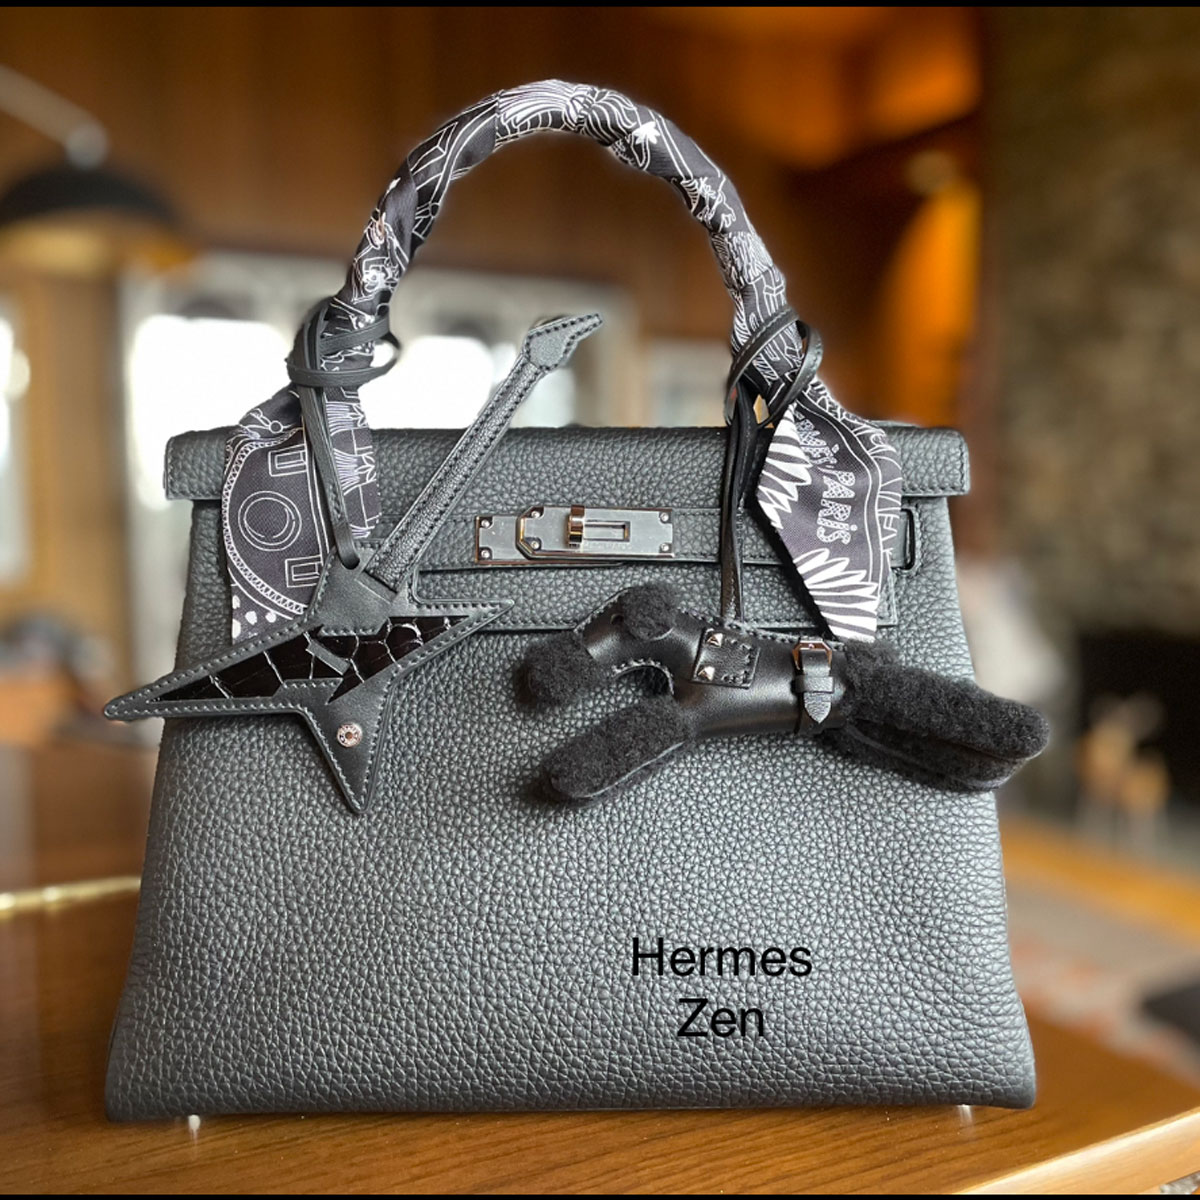 Hermès Comes Through “In The Clutch” - PurseBlog